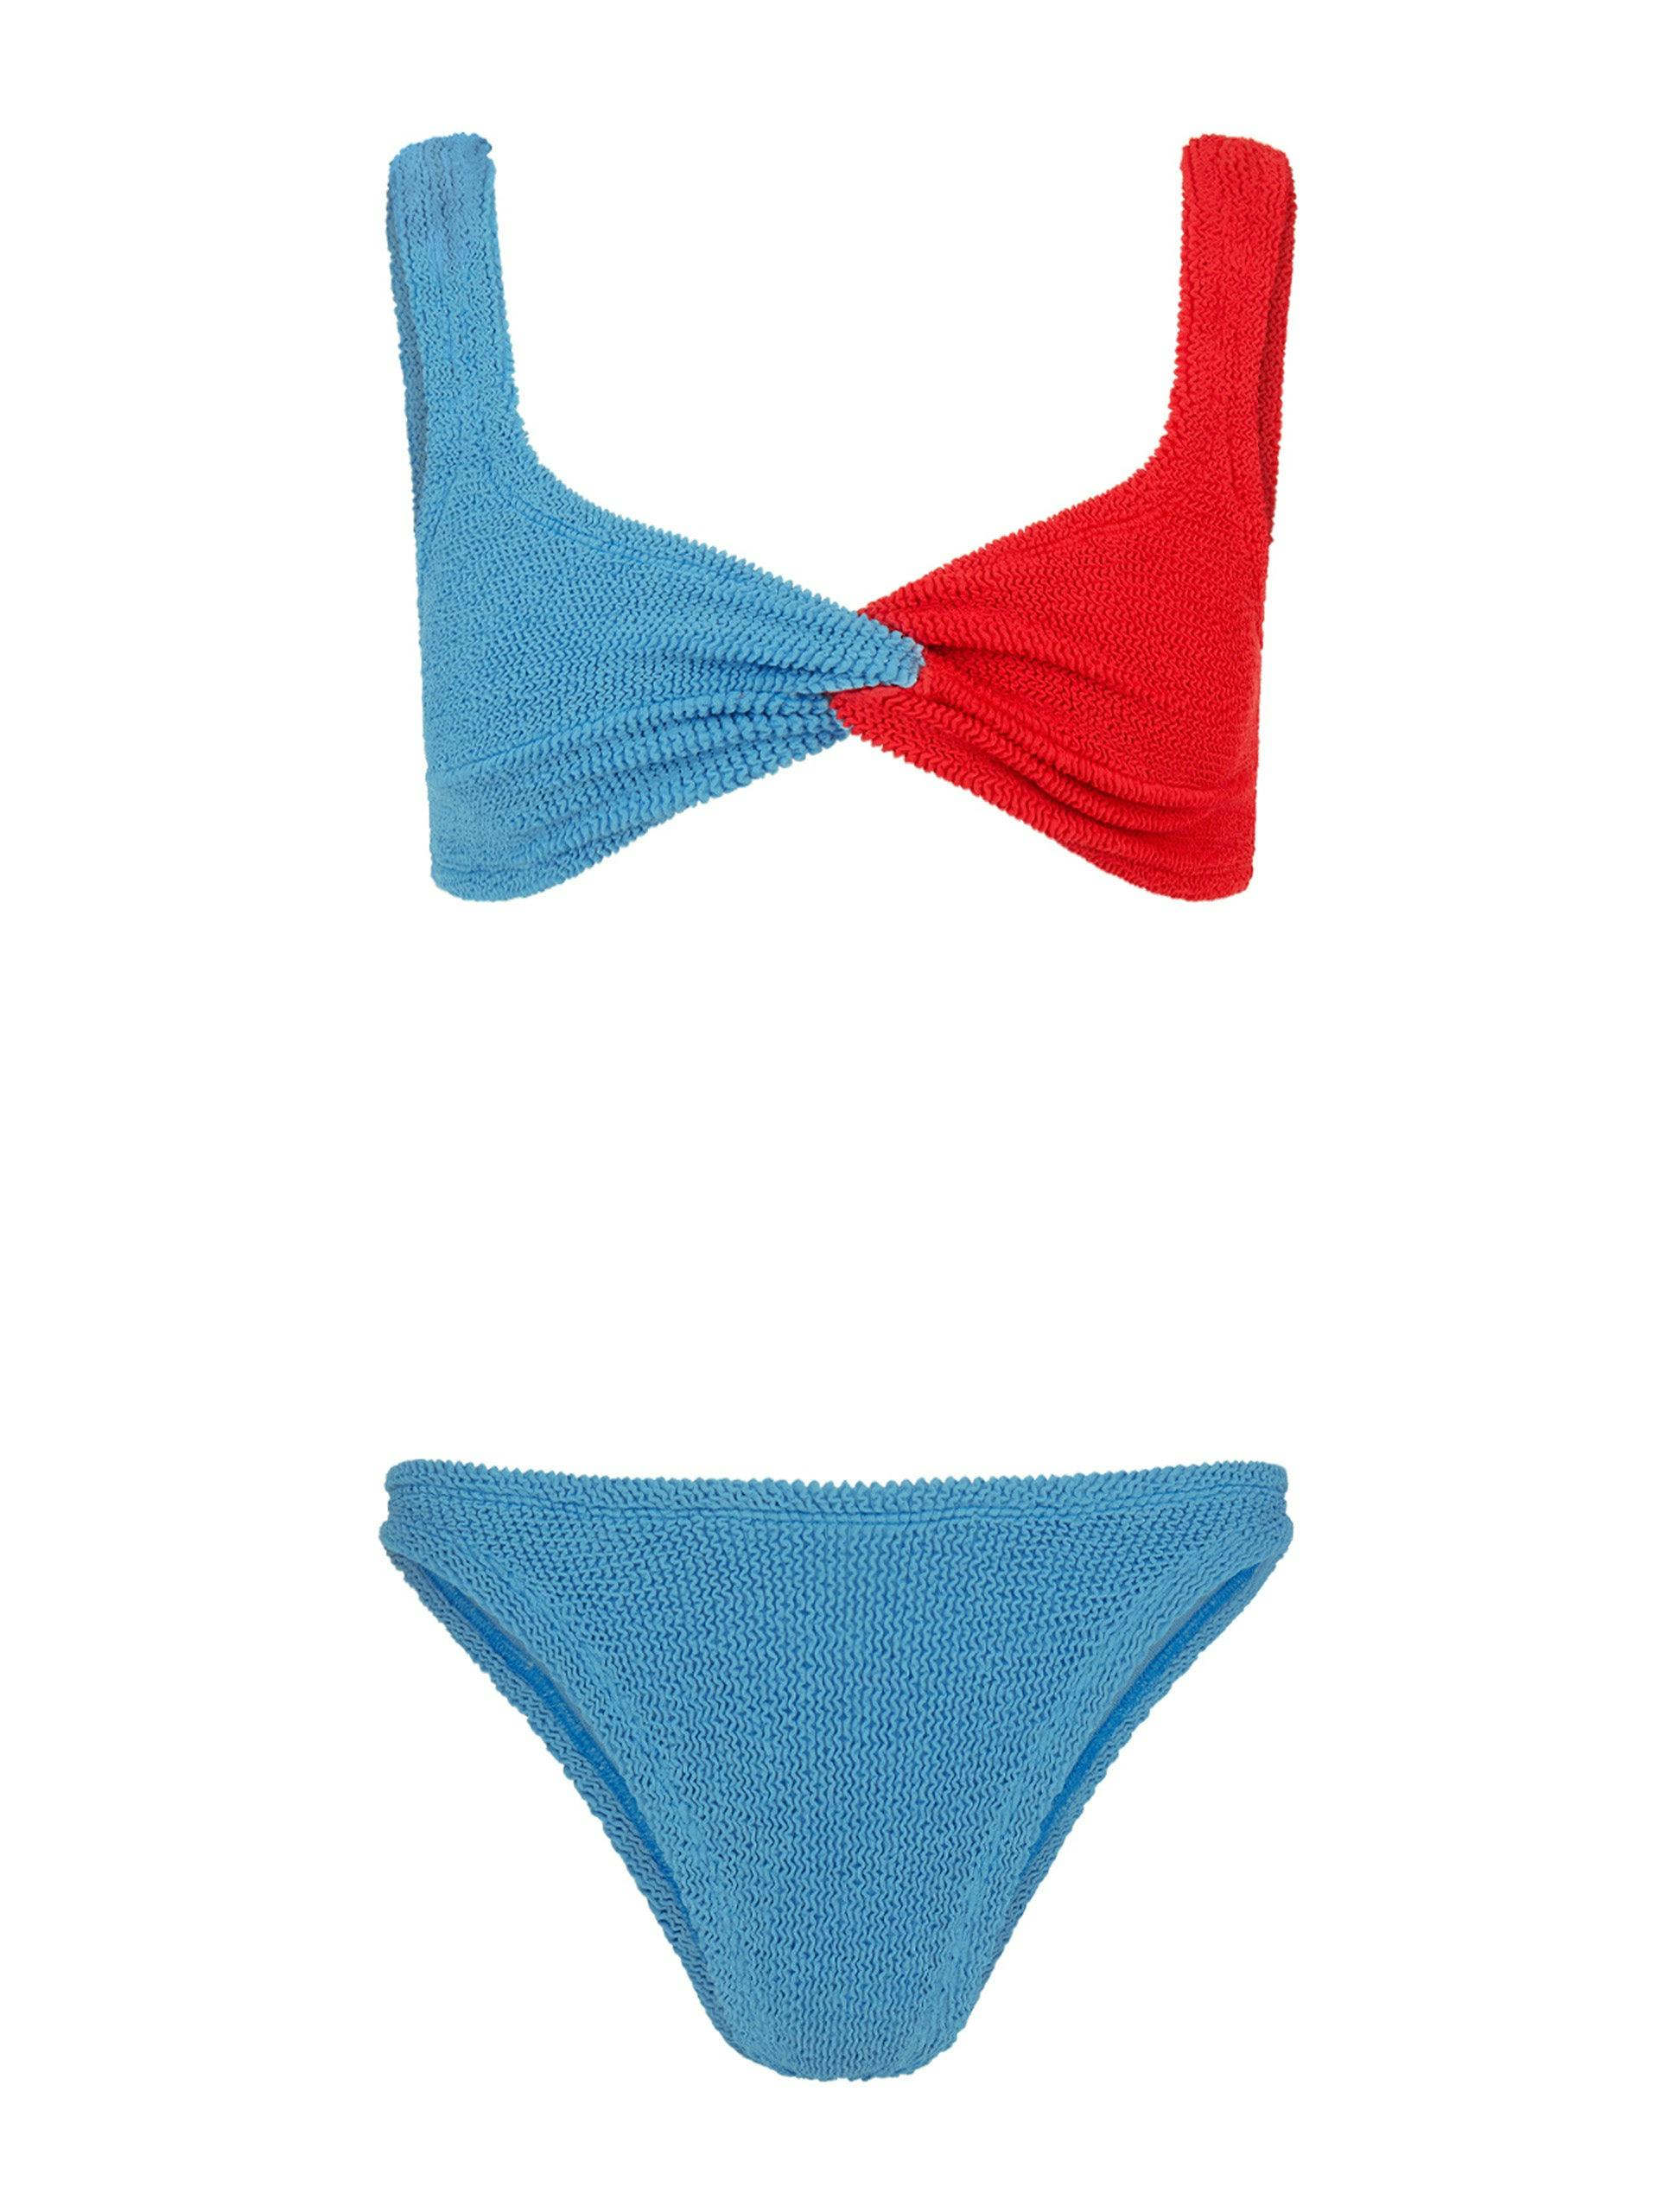 Duo Chelsea Bikini - Sky Blue/Red